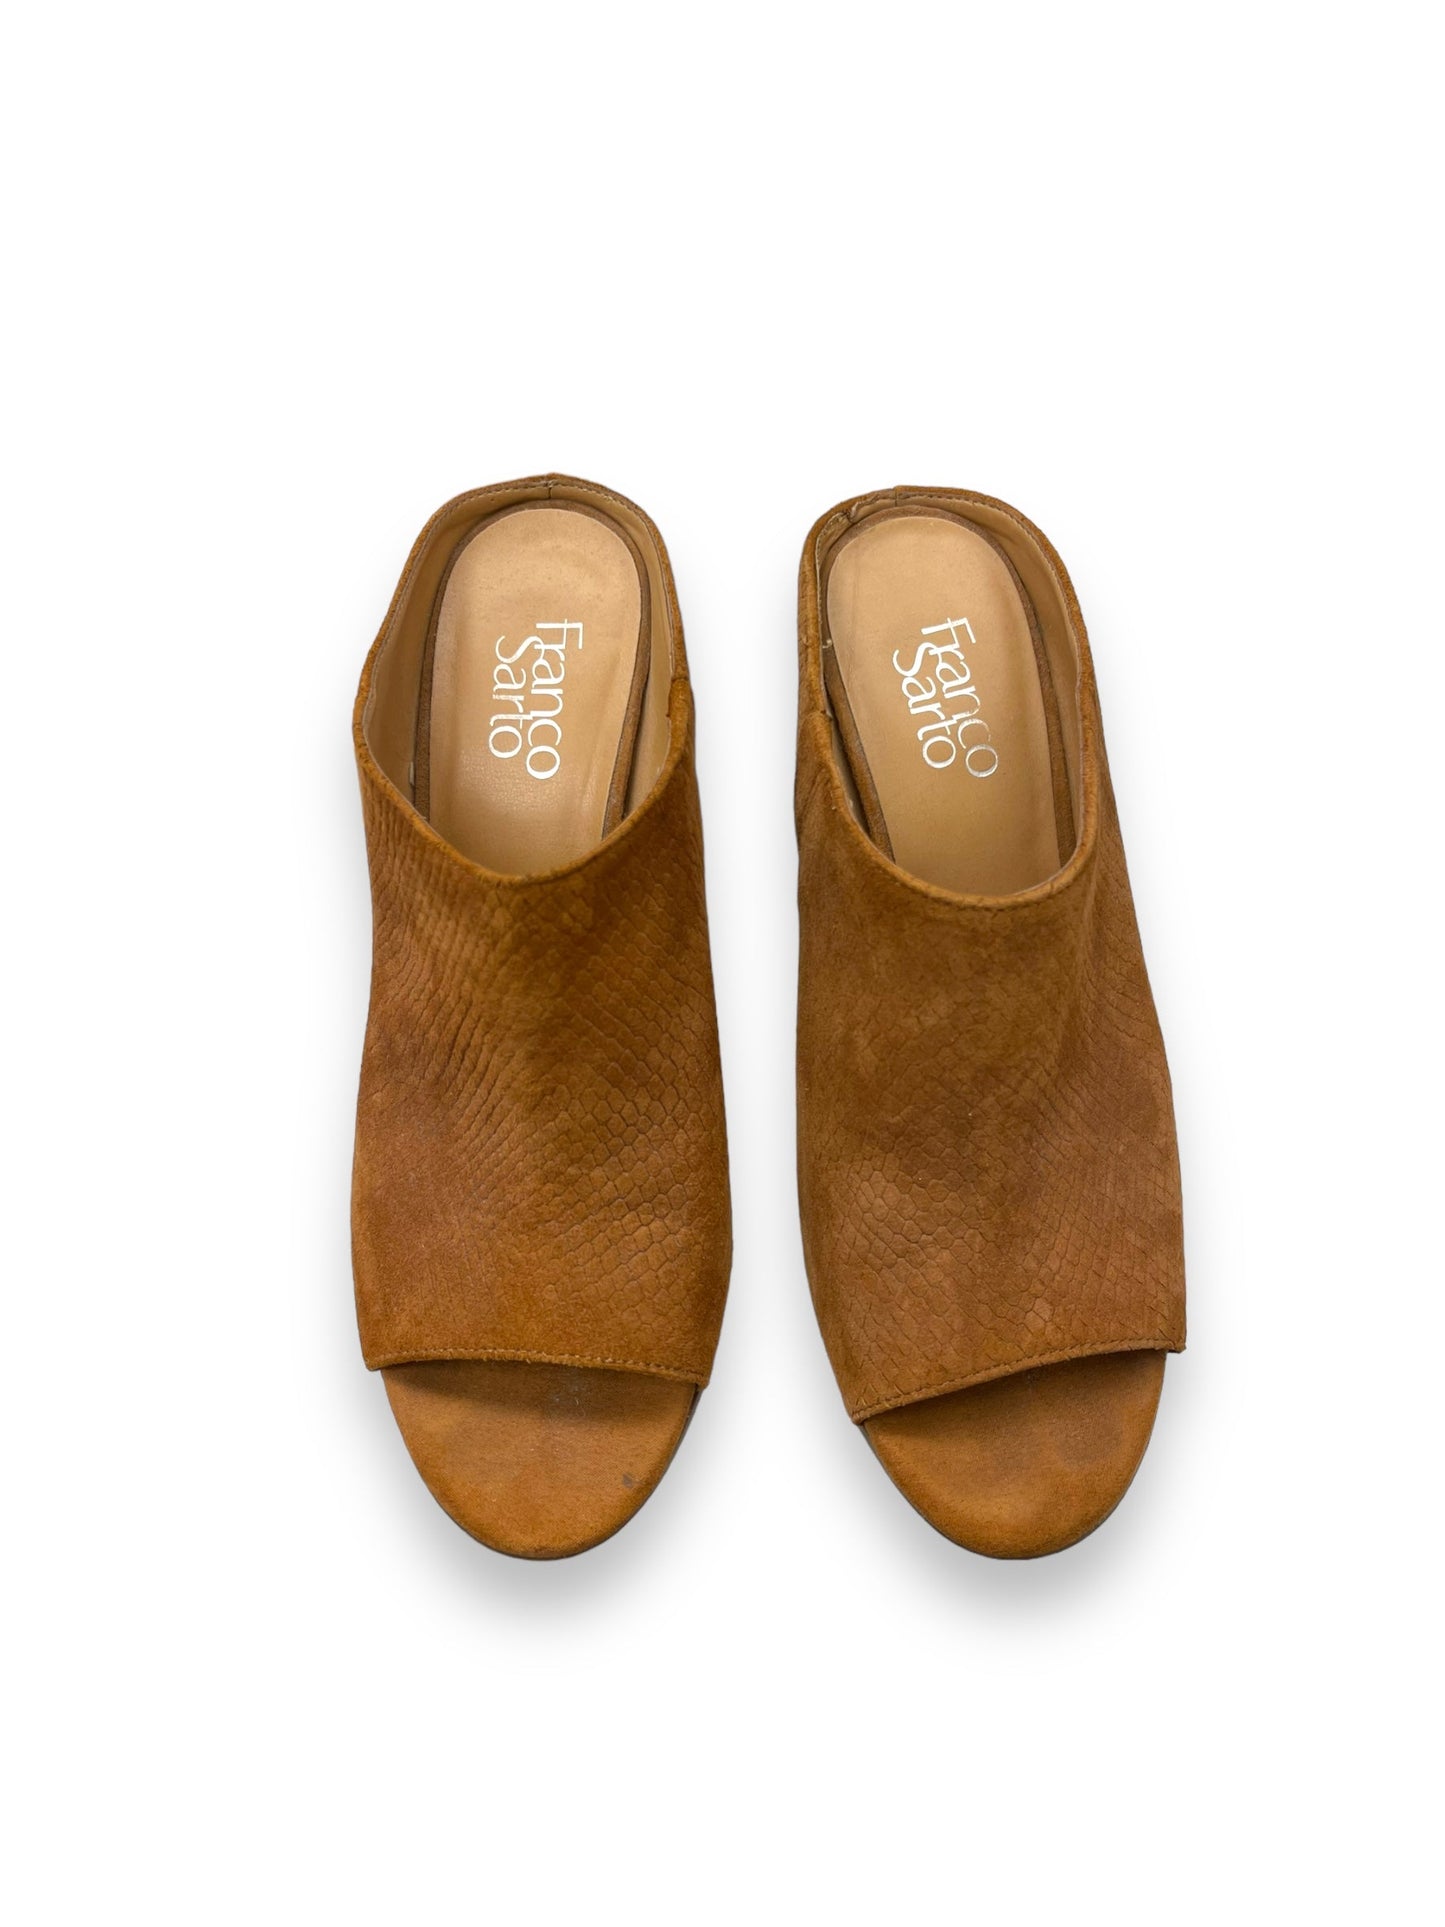 Shoes Heels Block By Franco Sarto  Size: 8.5